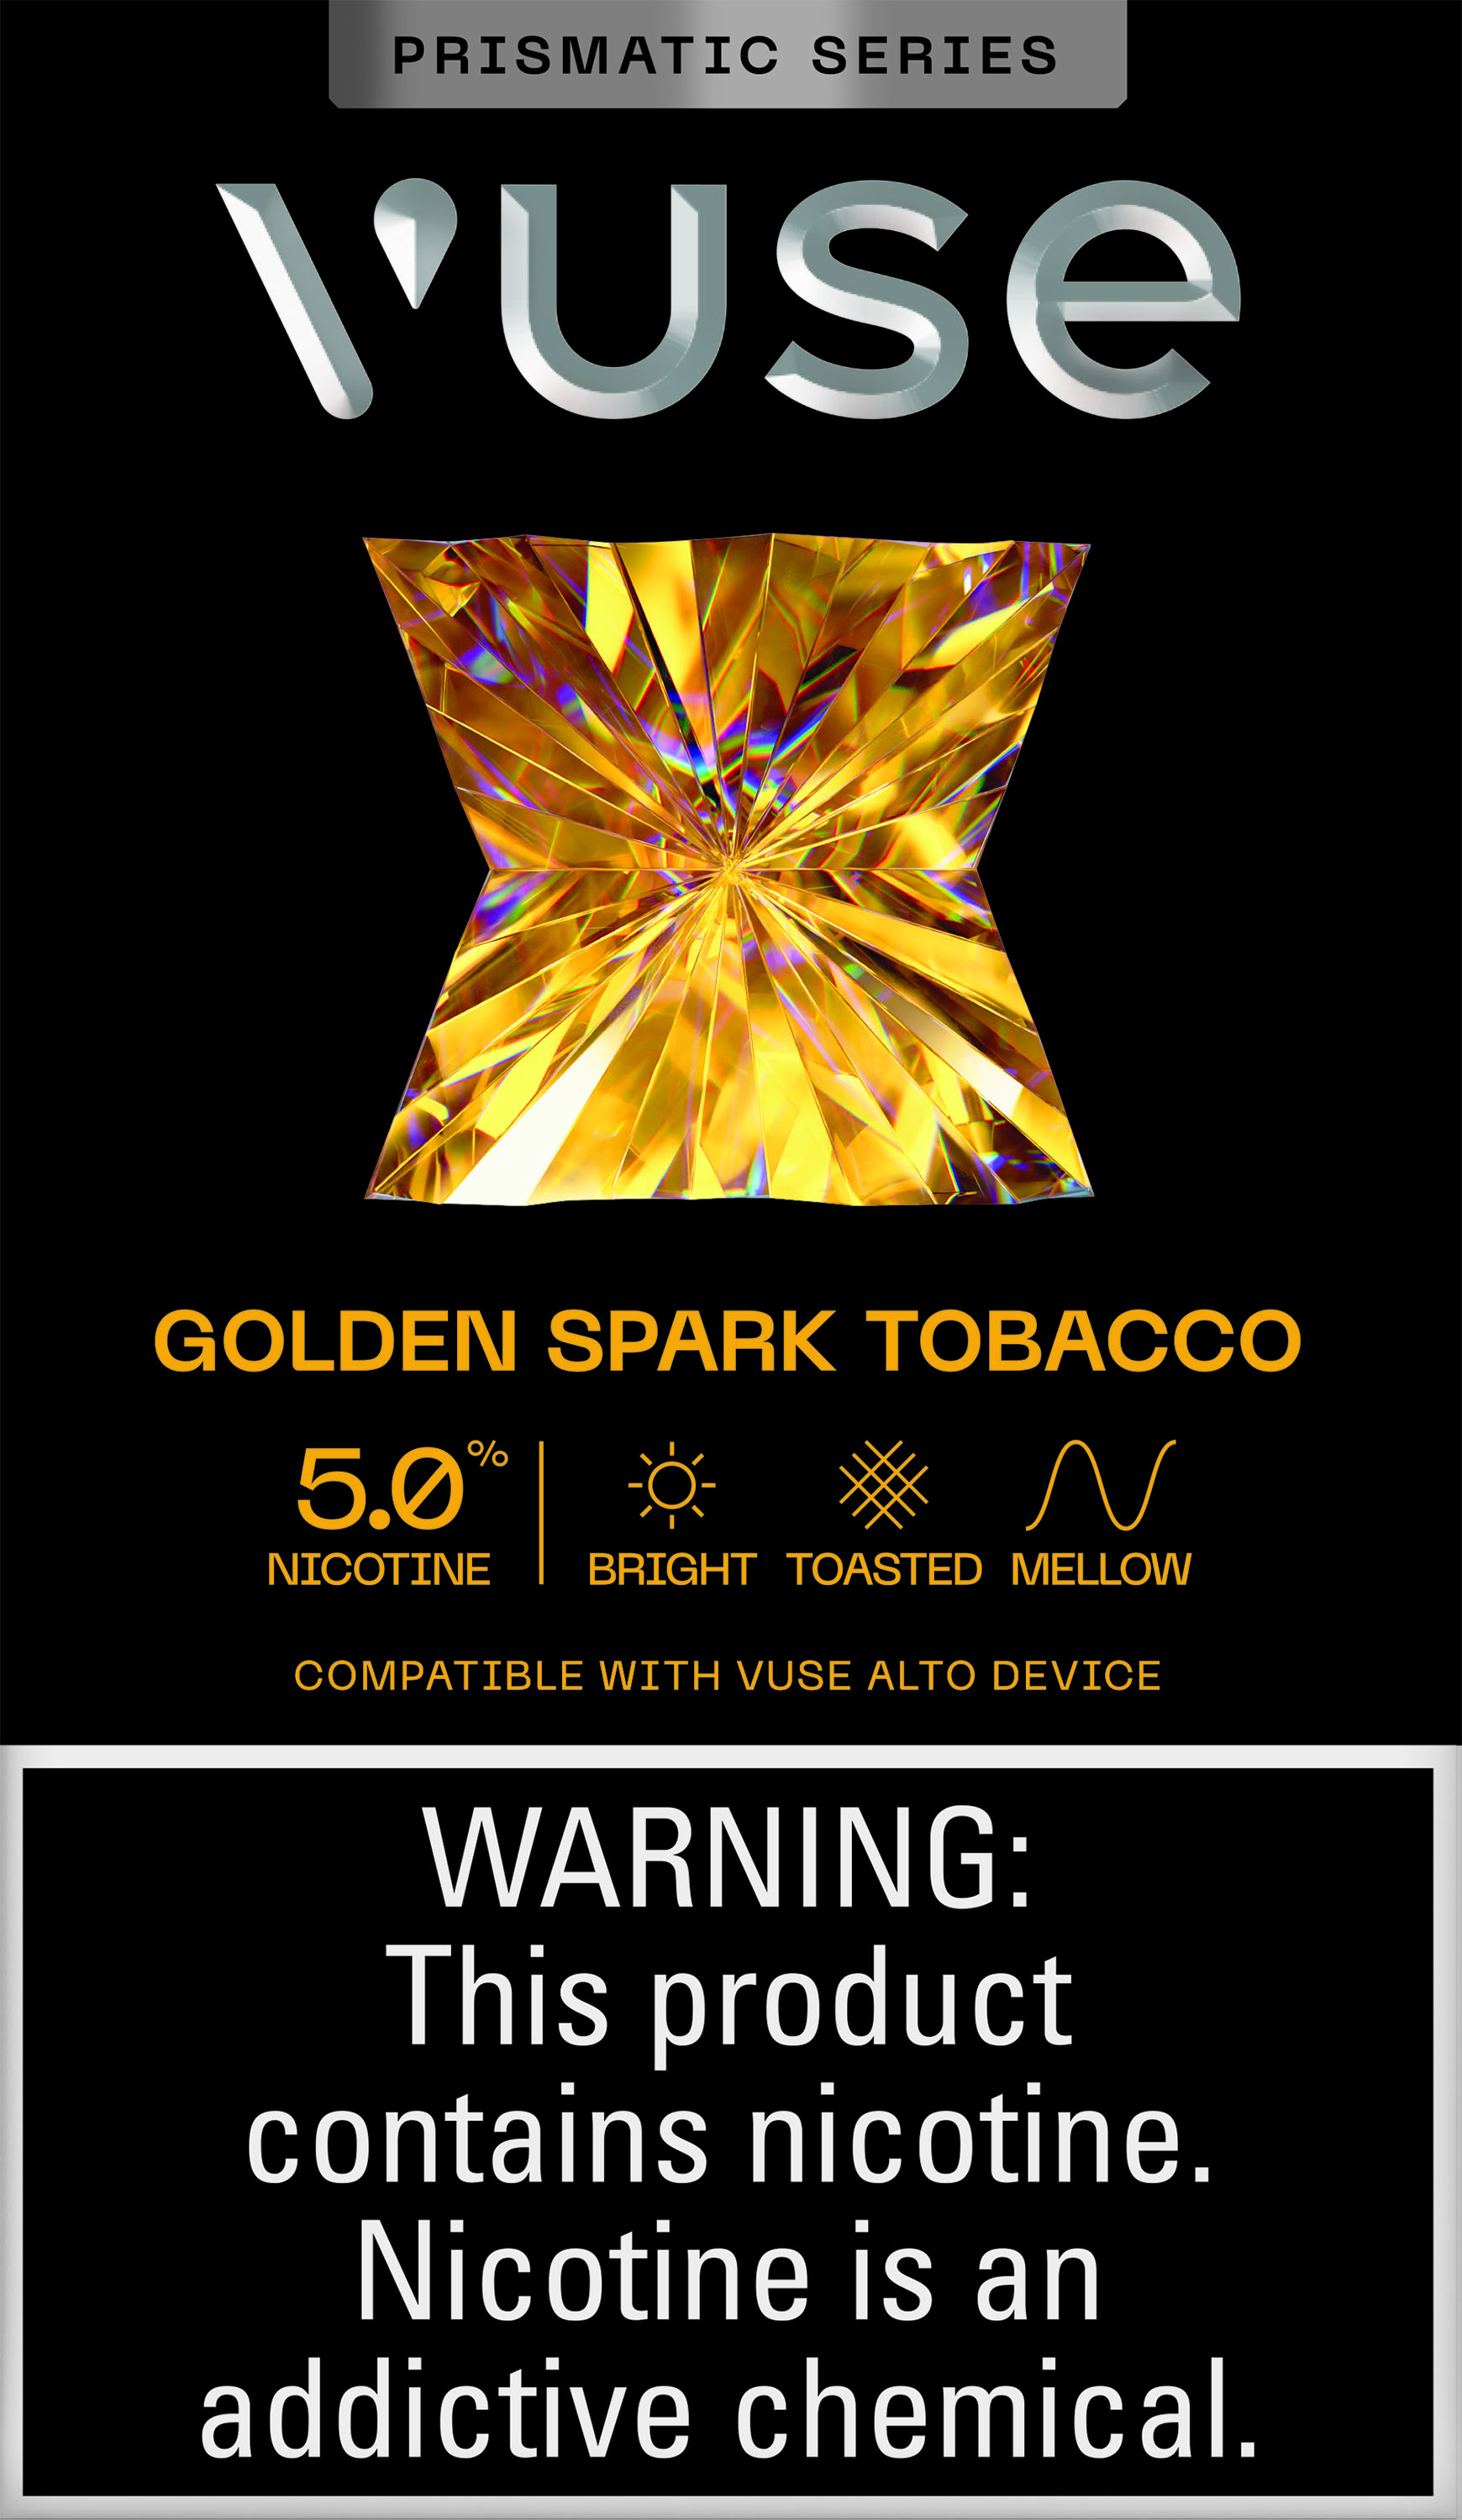 Vuse alto golden spark tob 5% 3/5ct